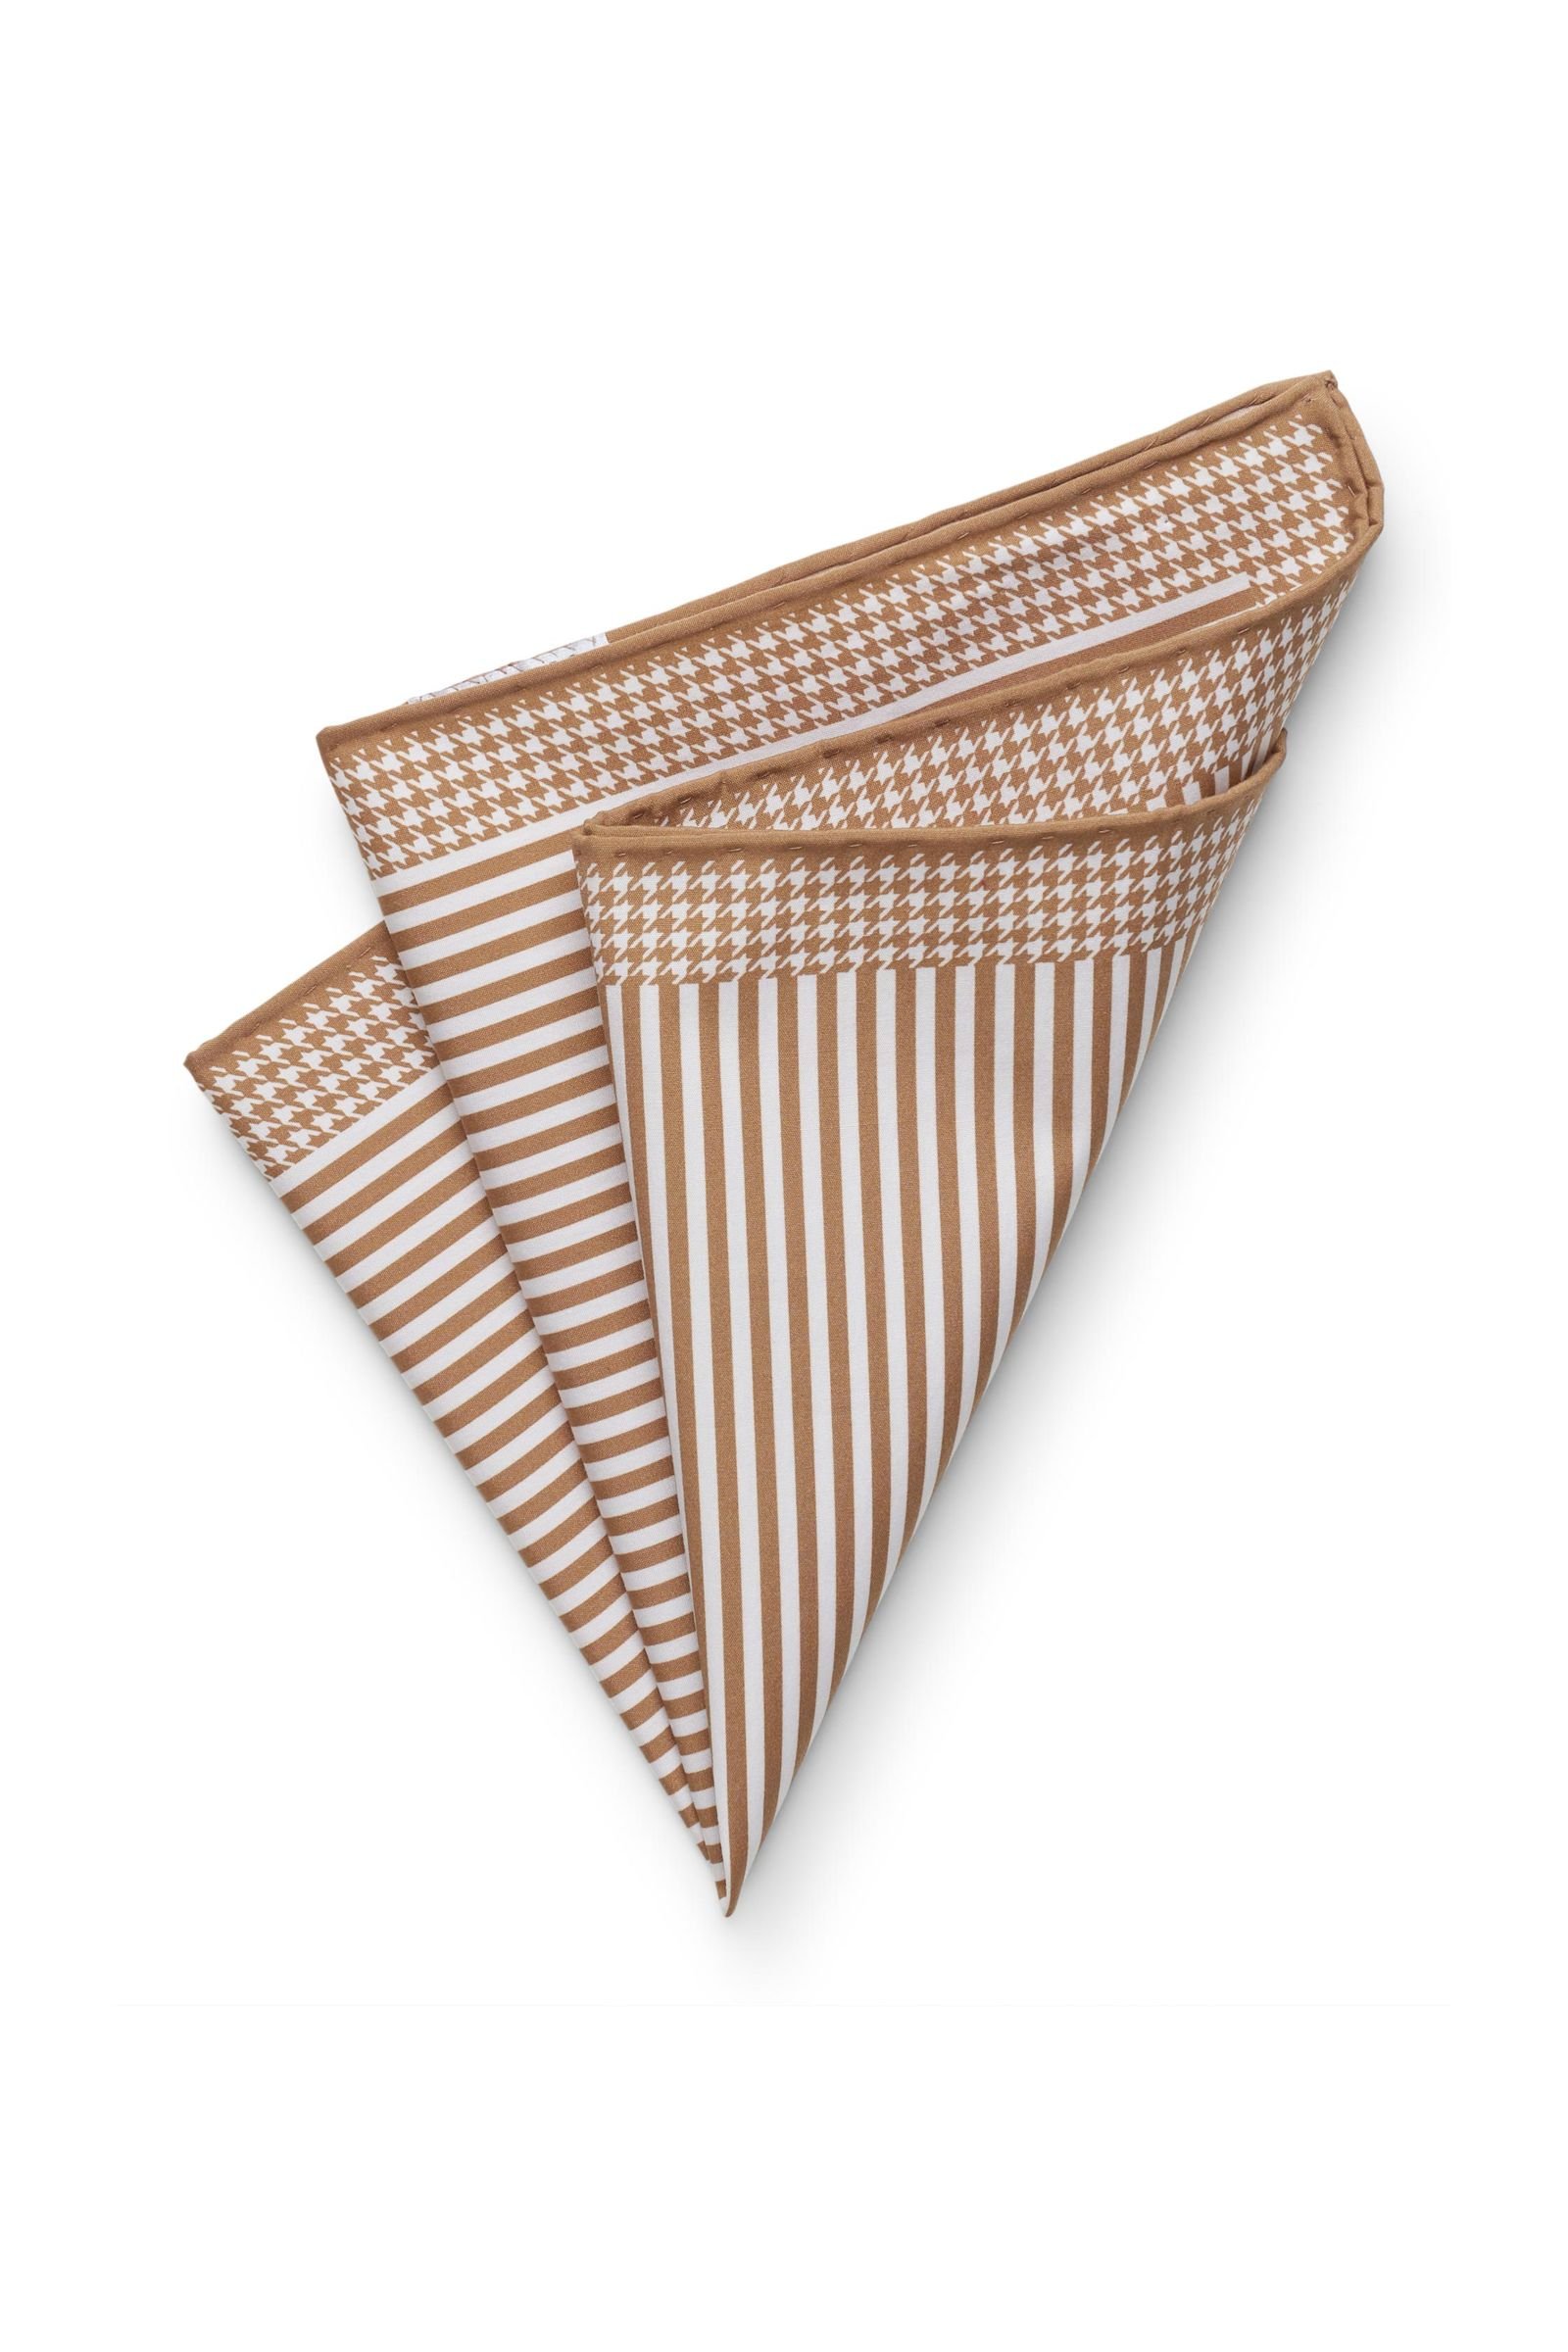 Pocket square brown/white striped